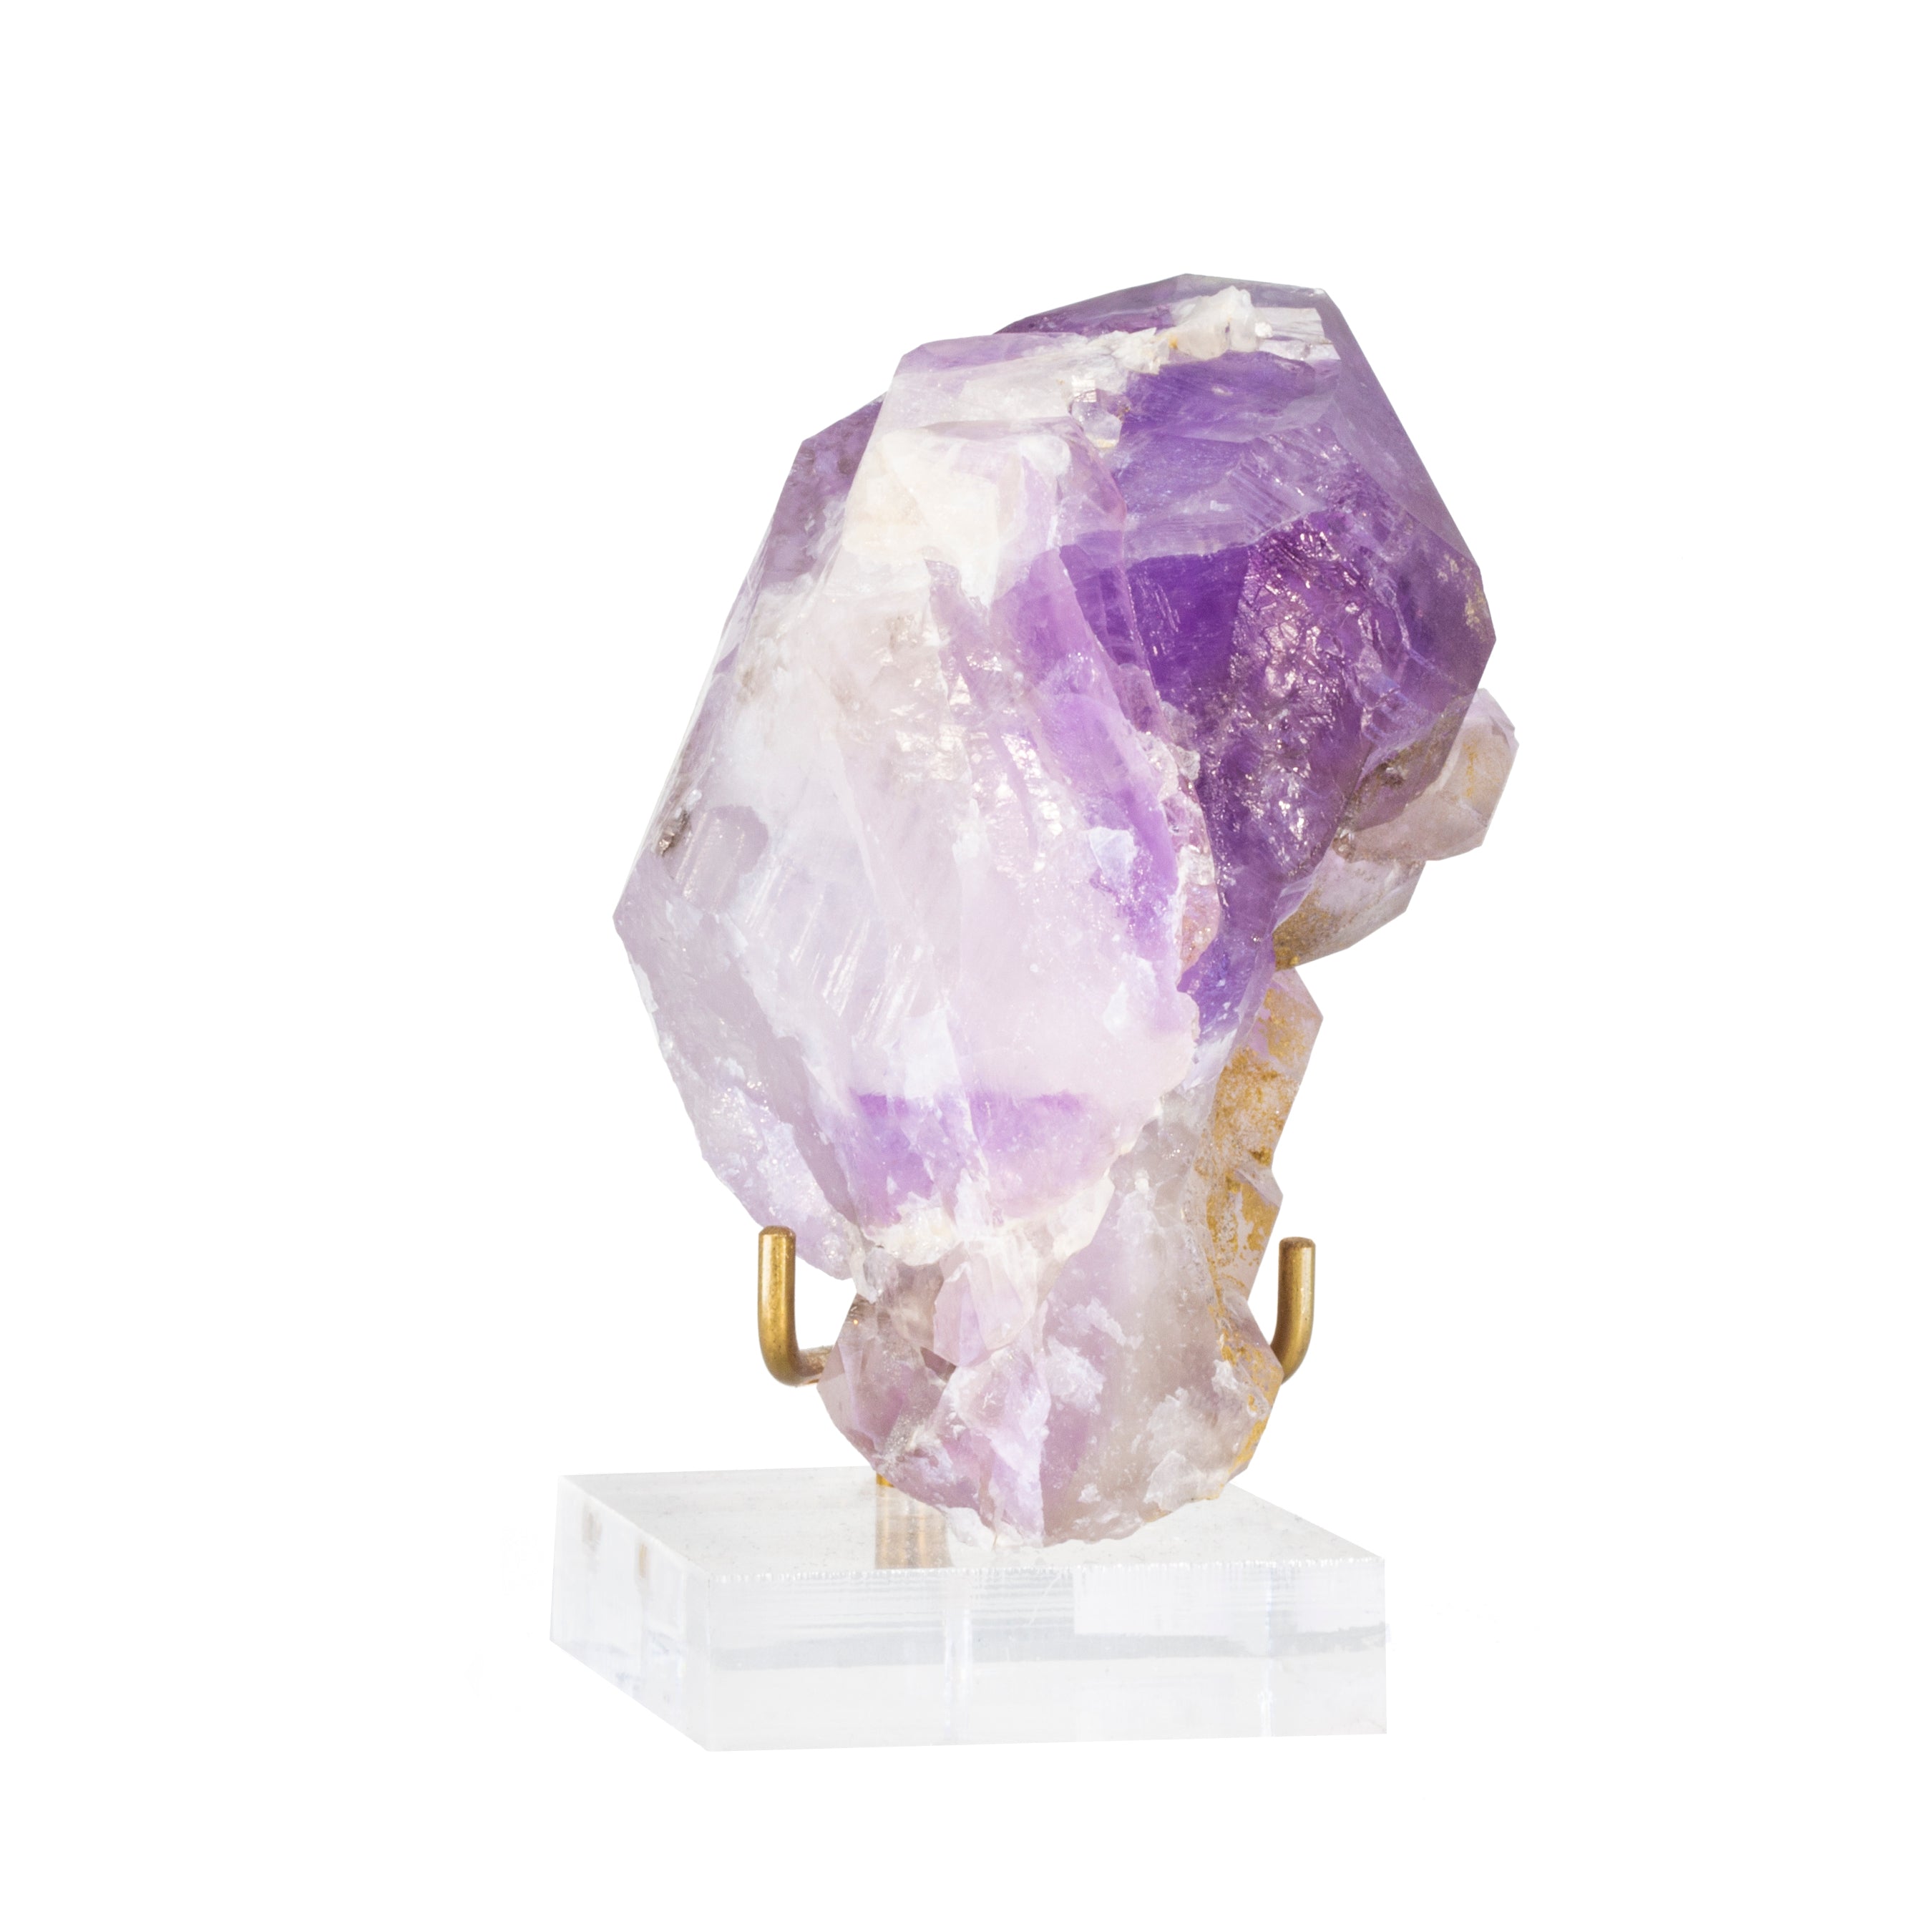 Amethyst 204 gram 3.3 inch Natural Crystal Specimen - Jackson's Crossroads, Georgia, USA - HHX-285 - Crystalarium